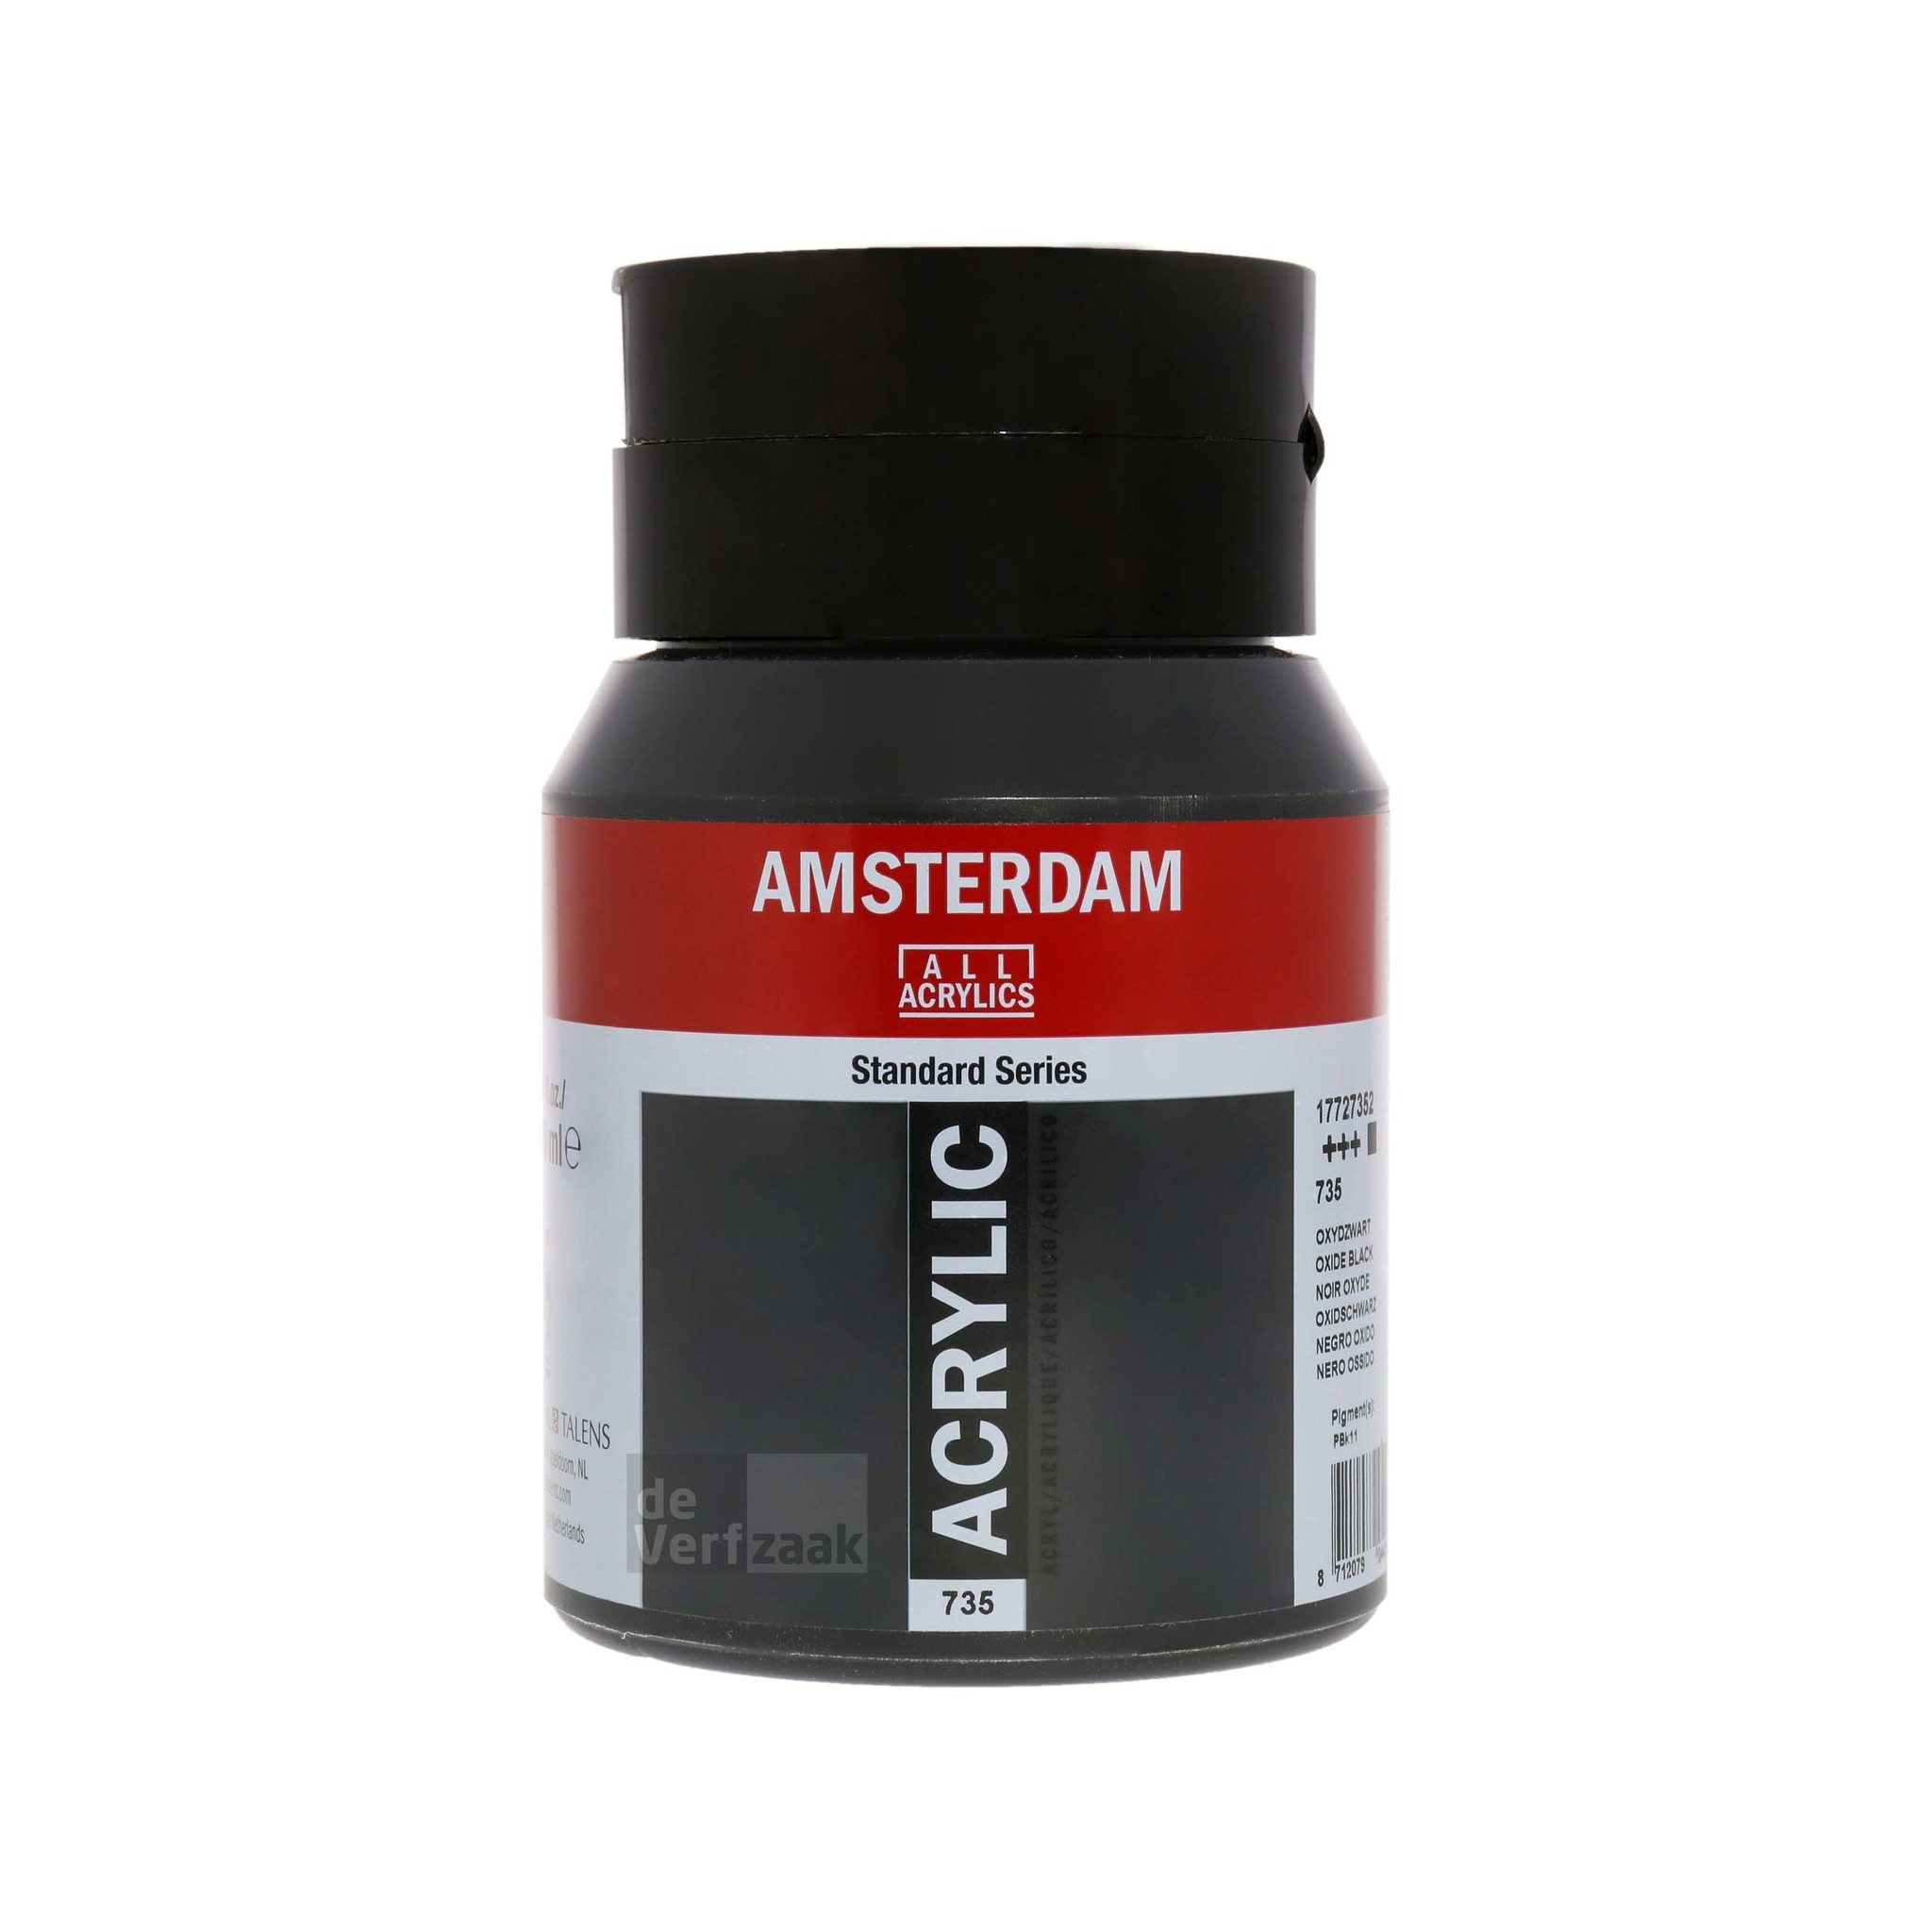 Royal Talens Amsterdam Acrylverf 500 ml - Oxydzwart